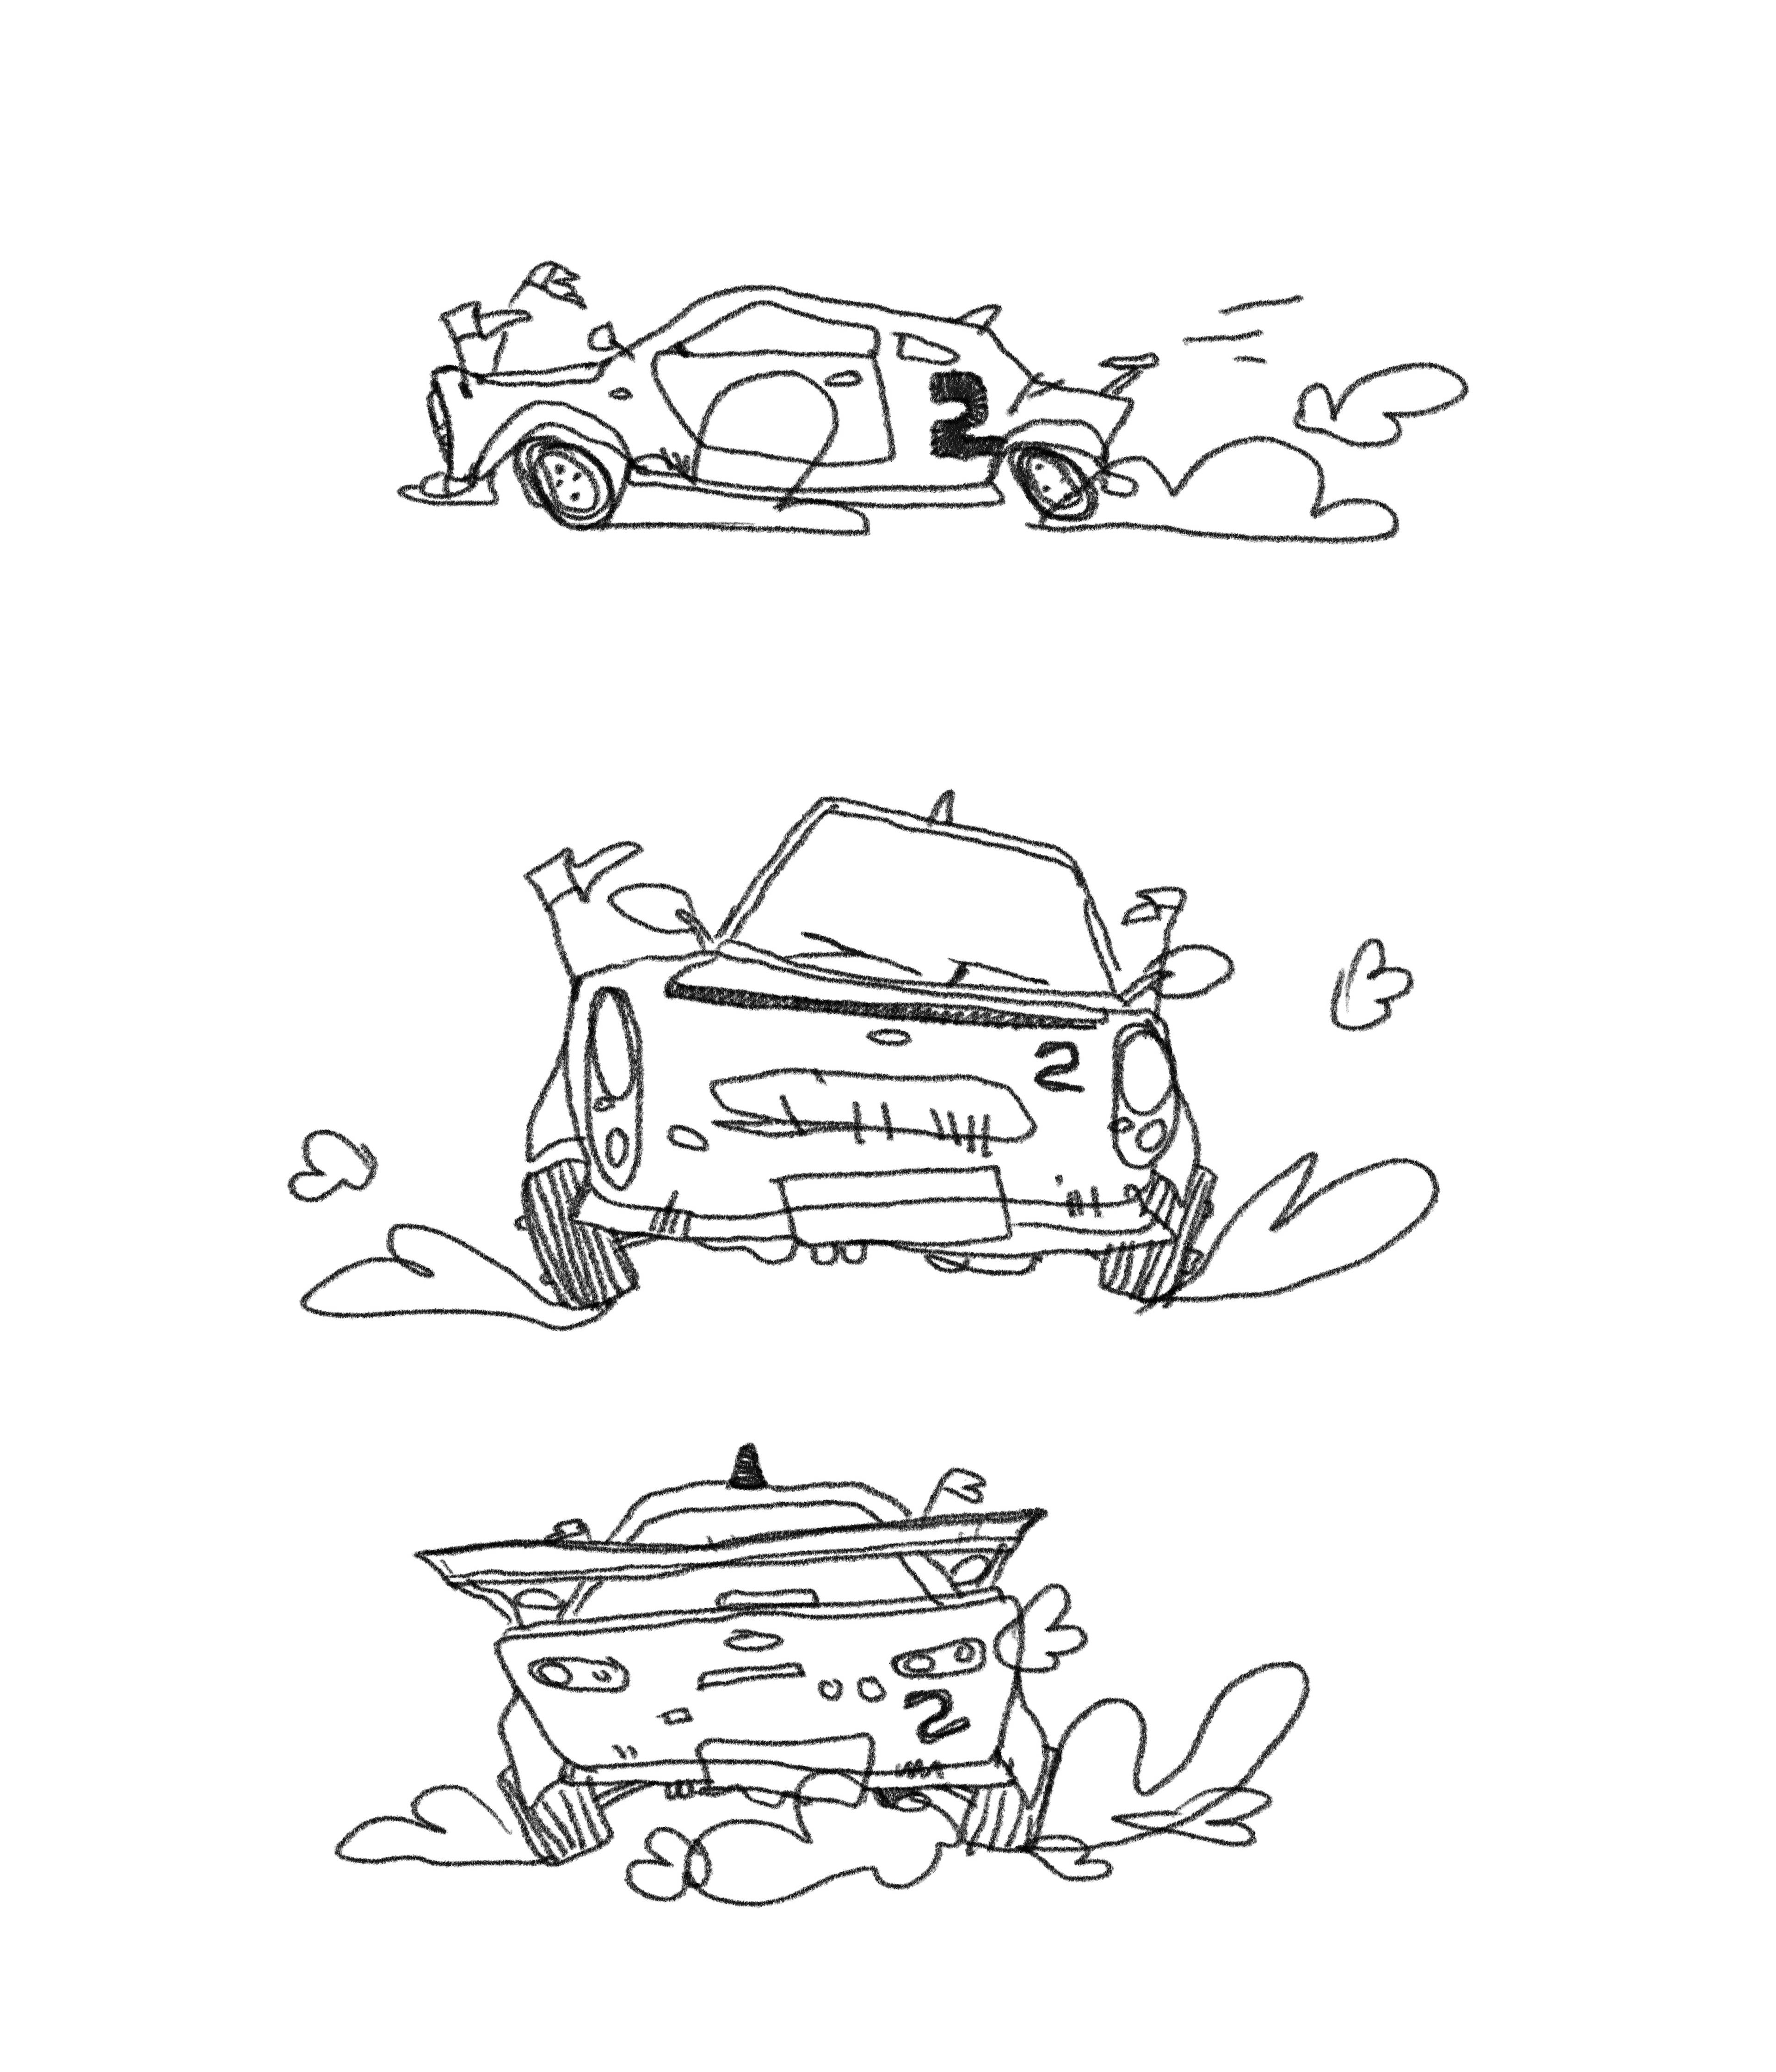 Sketches of a car